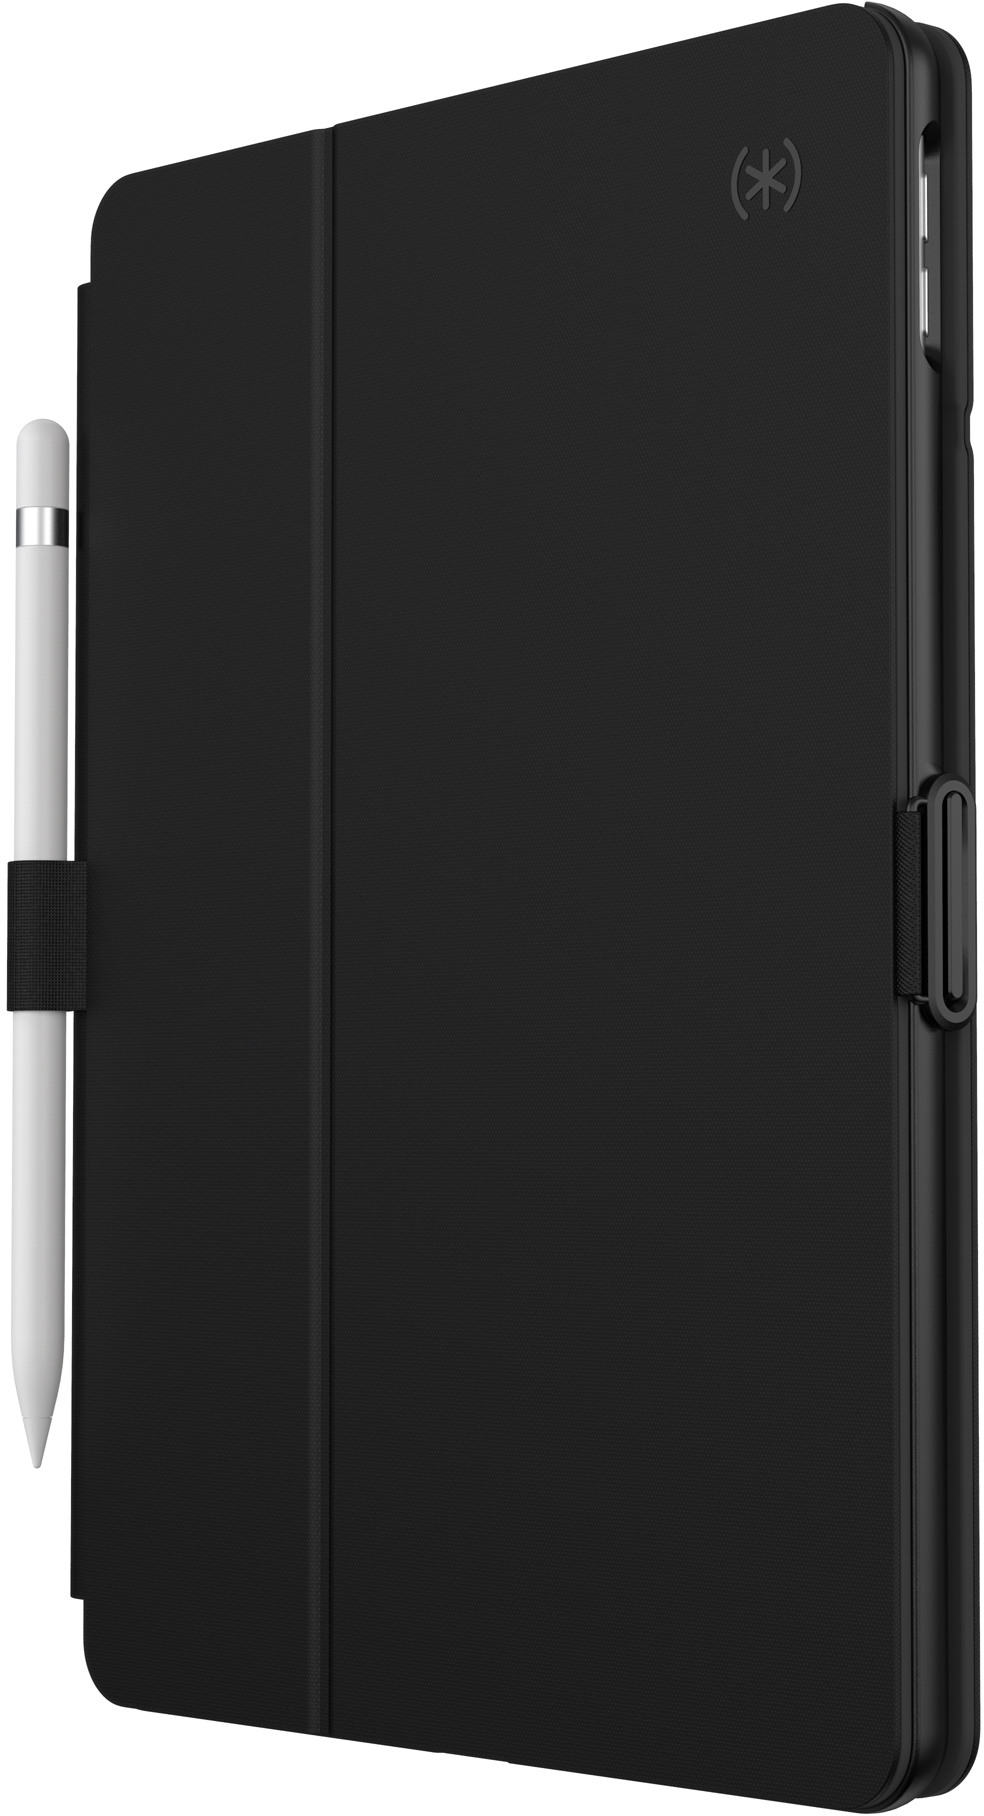 SPECK nce Folio MB Black/Black 138654-1050 for iPad (2019/2020), 10.2